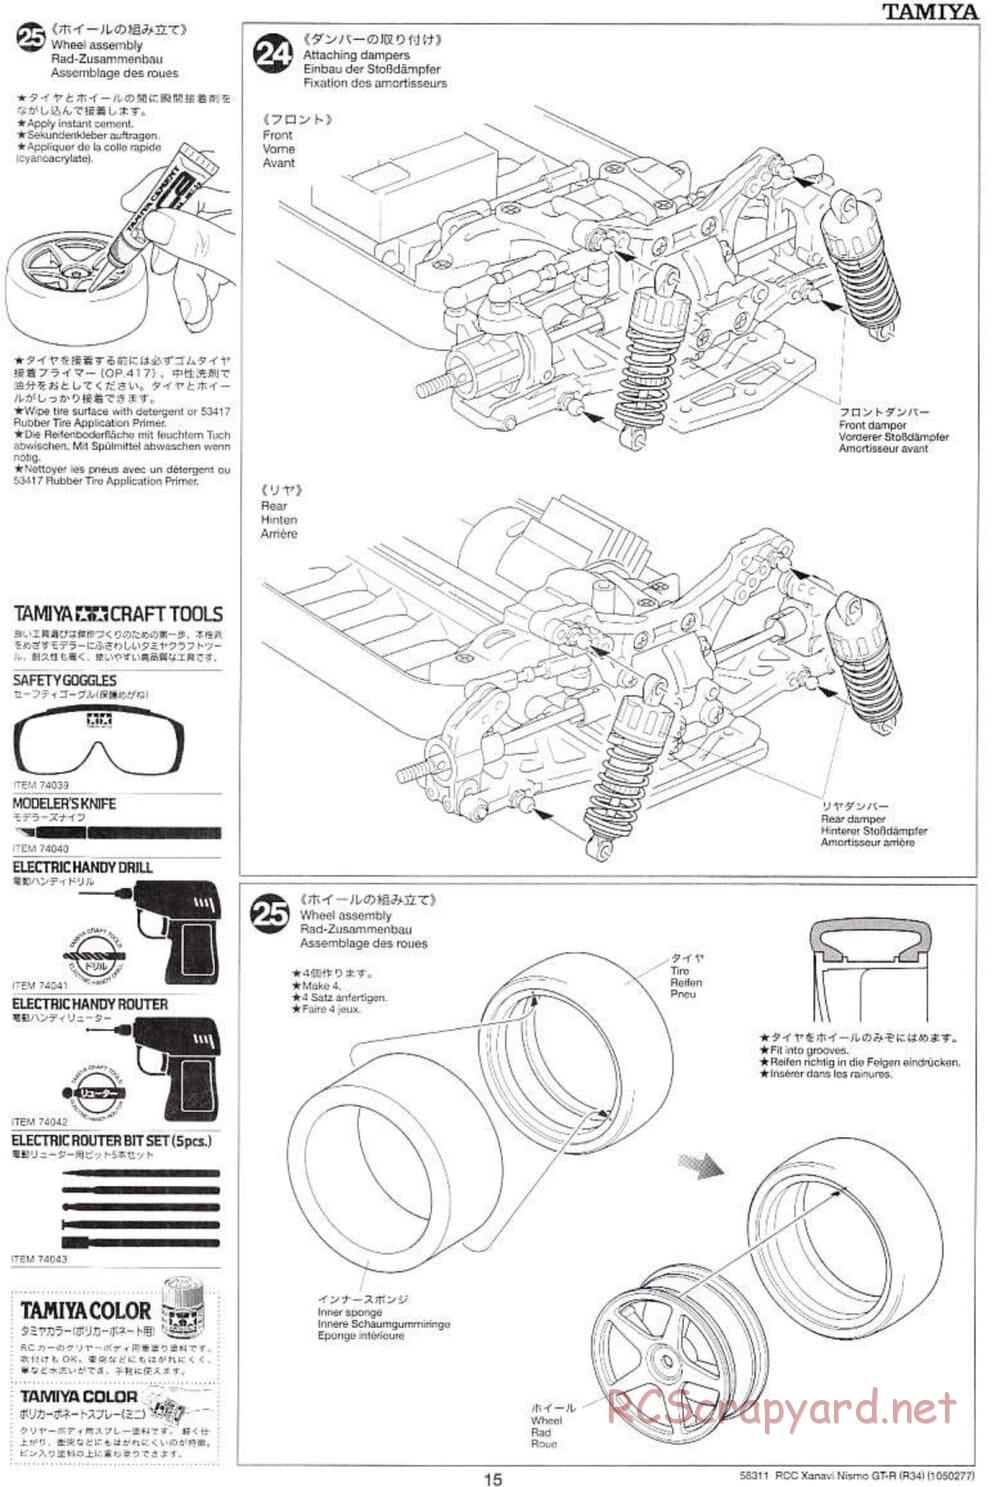 Tamiya - Xanavi Nismo GT-R (R34) - TB-02 Chassis - Manual - Page 15